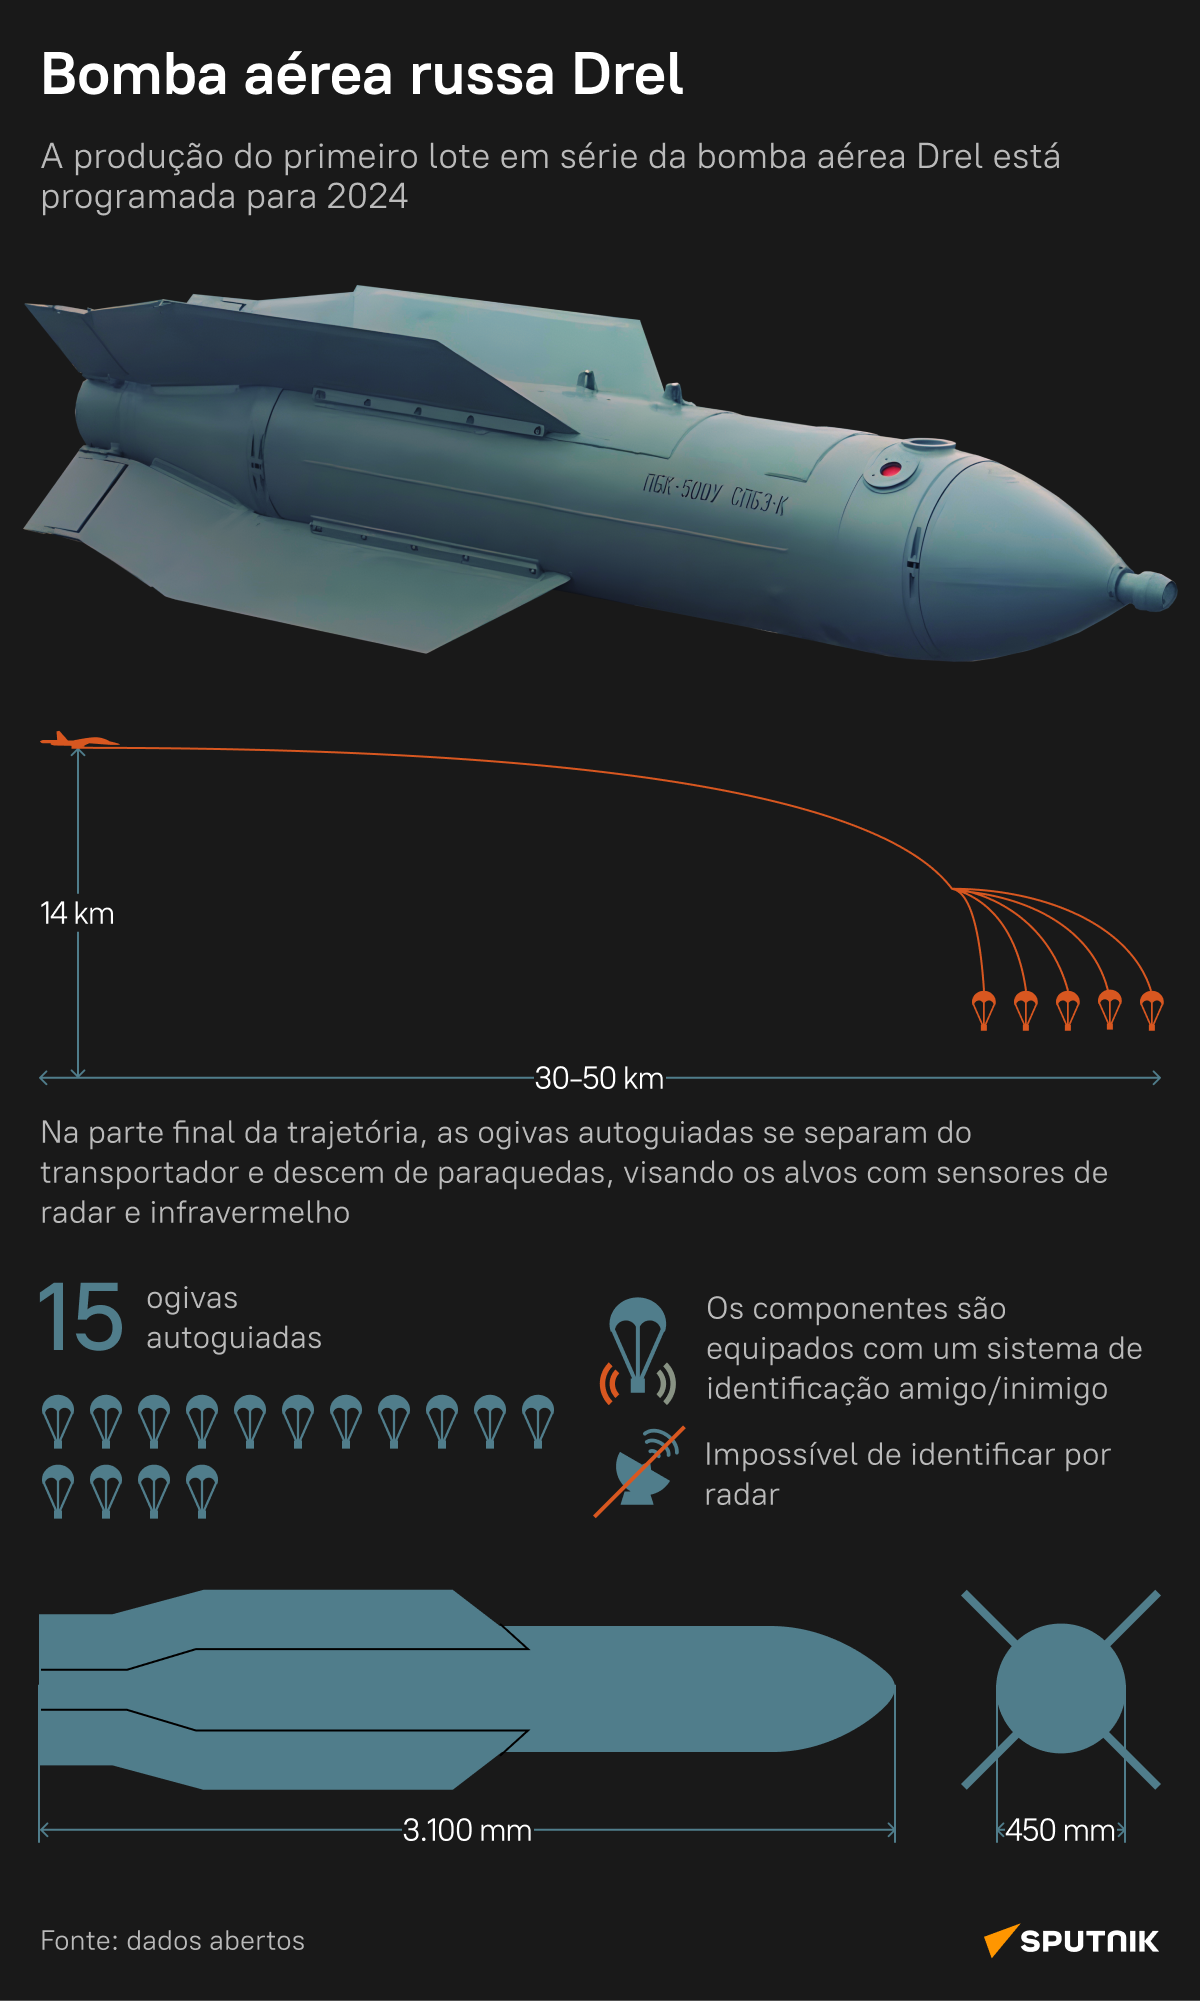 Descubra Drel, a nova bomba russa segura para civis - Sputnik Brasil